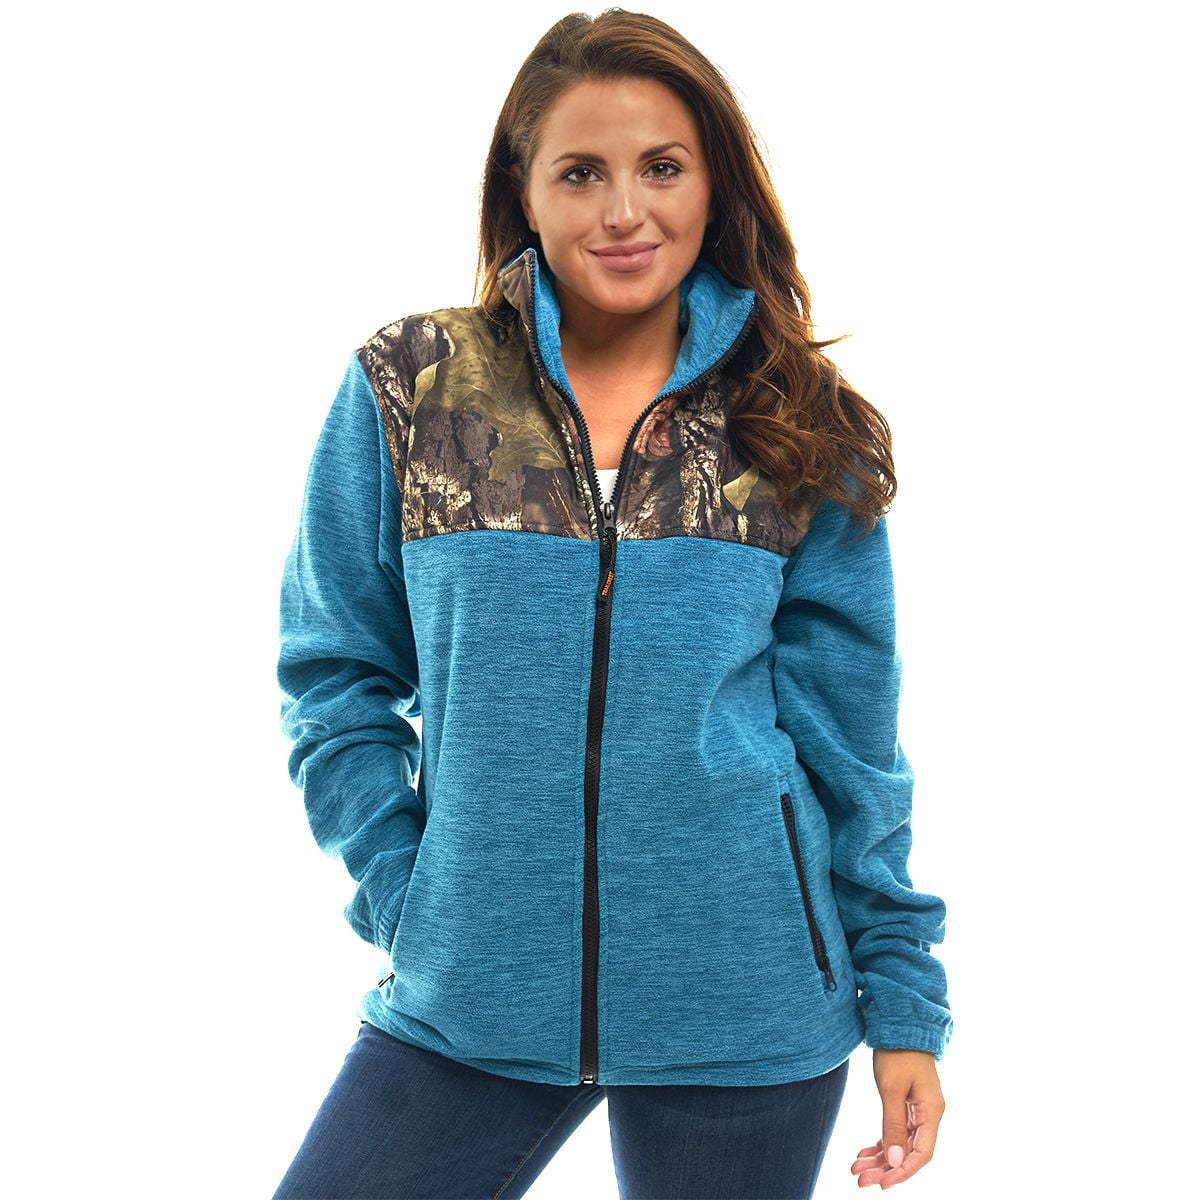 TrailCrest Womens C-Max Full Zip Polar Fleece Jacket Mossy Oak Camo Patterns